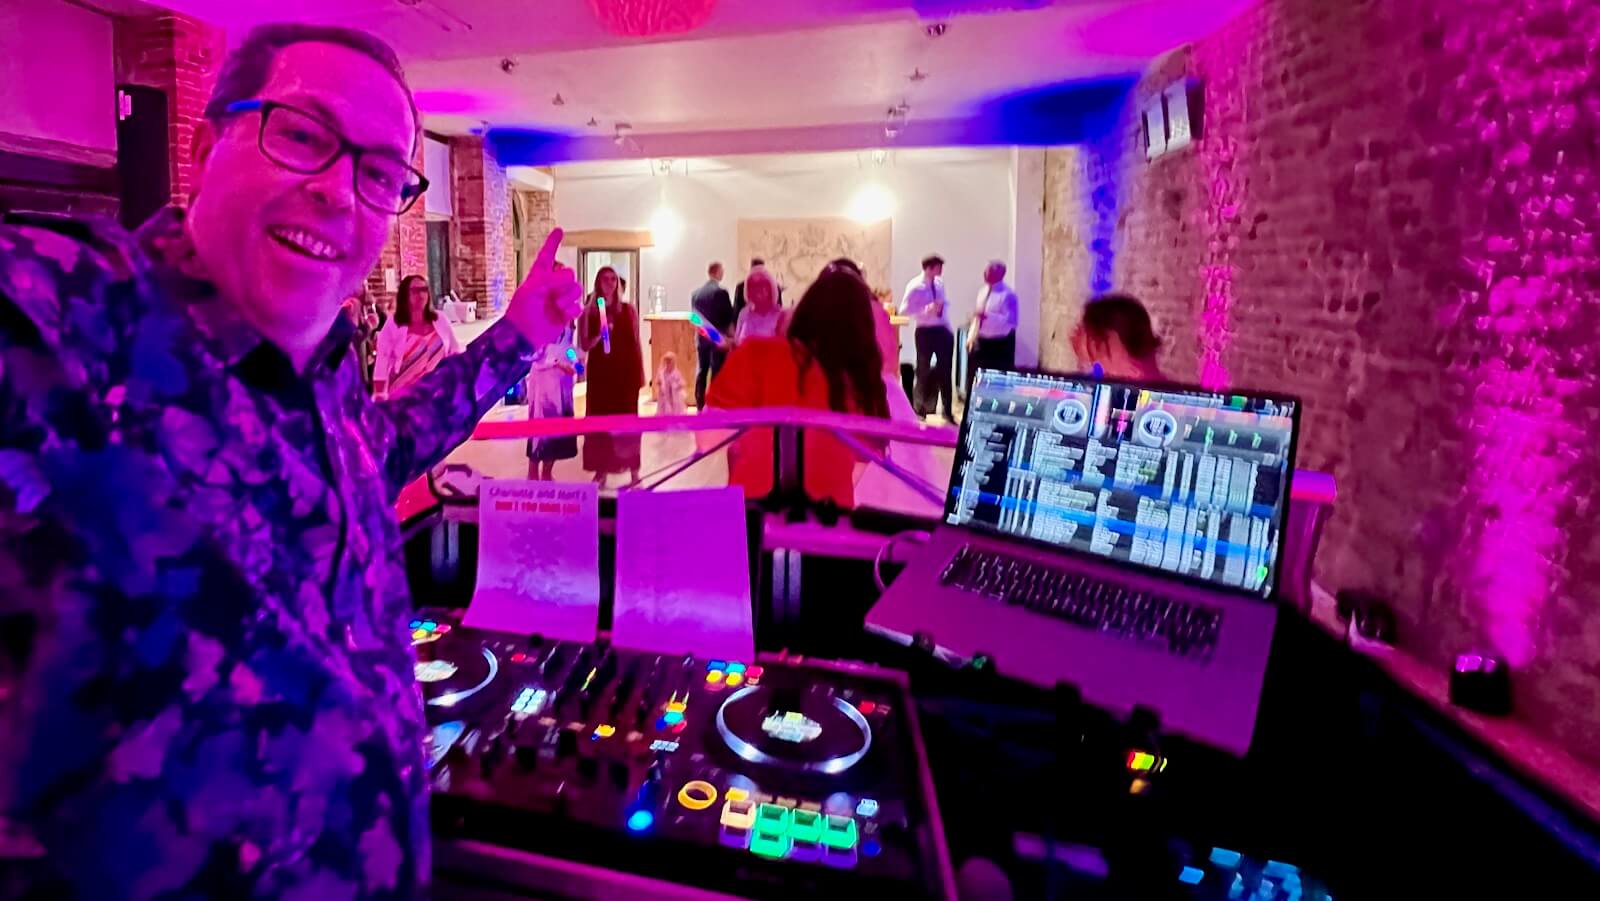 Brian Mole wedding DJ at The Walled Garden wedding and event venue, Cowdray